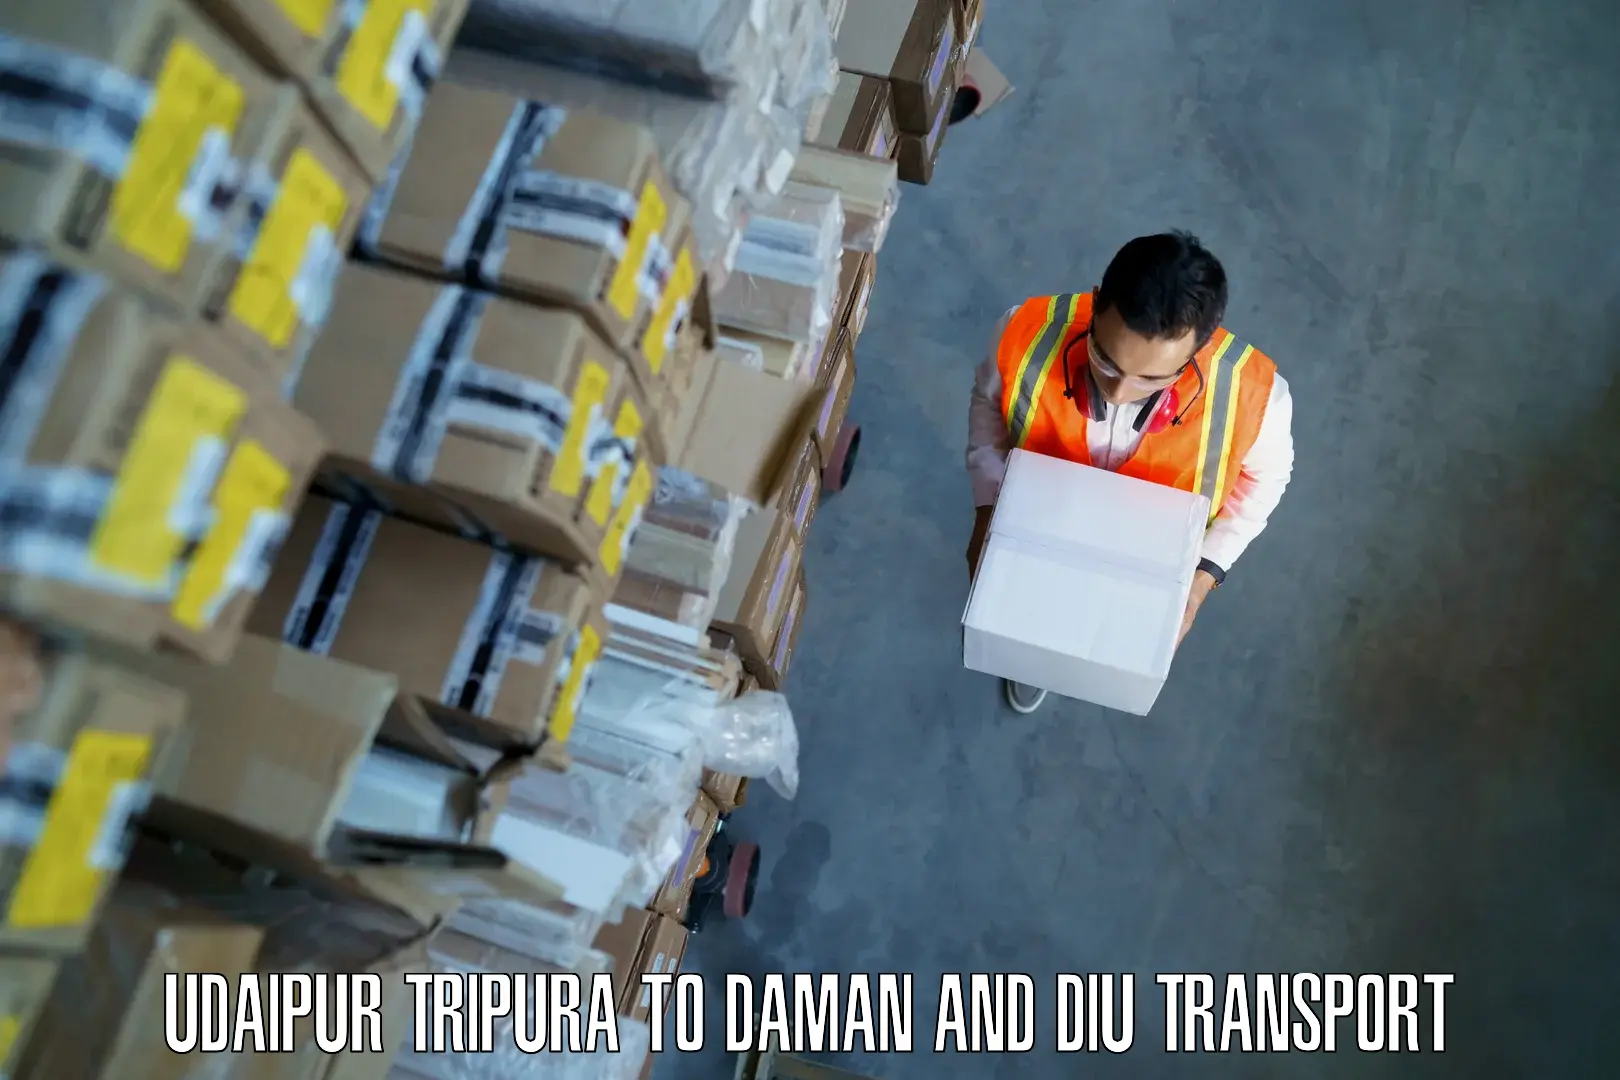 Transport in sharing Udaipur Tripura to Diu